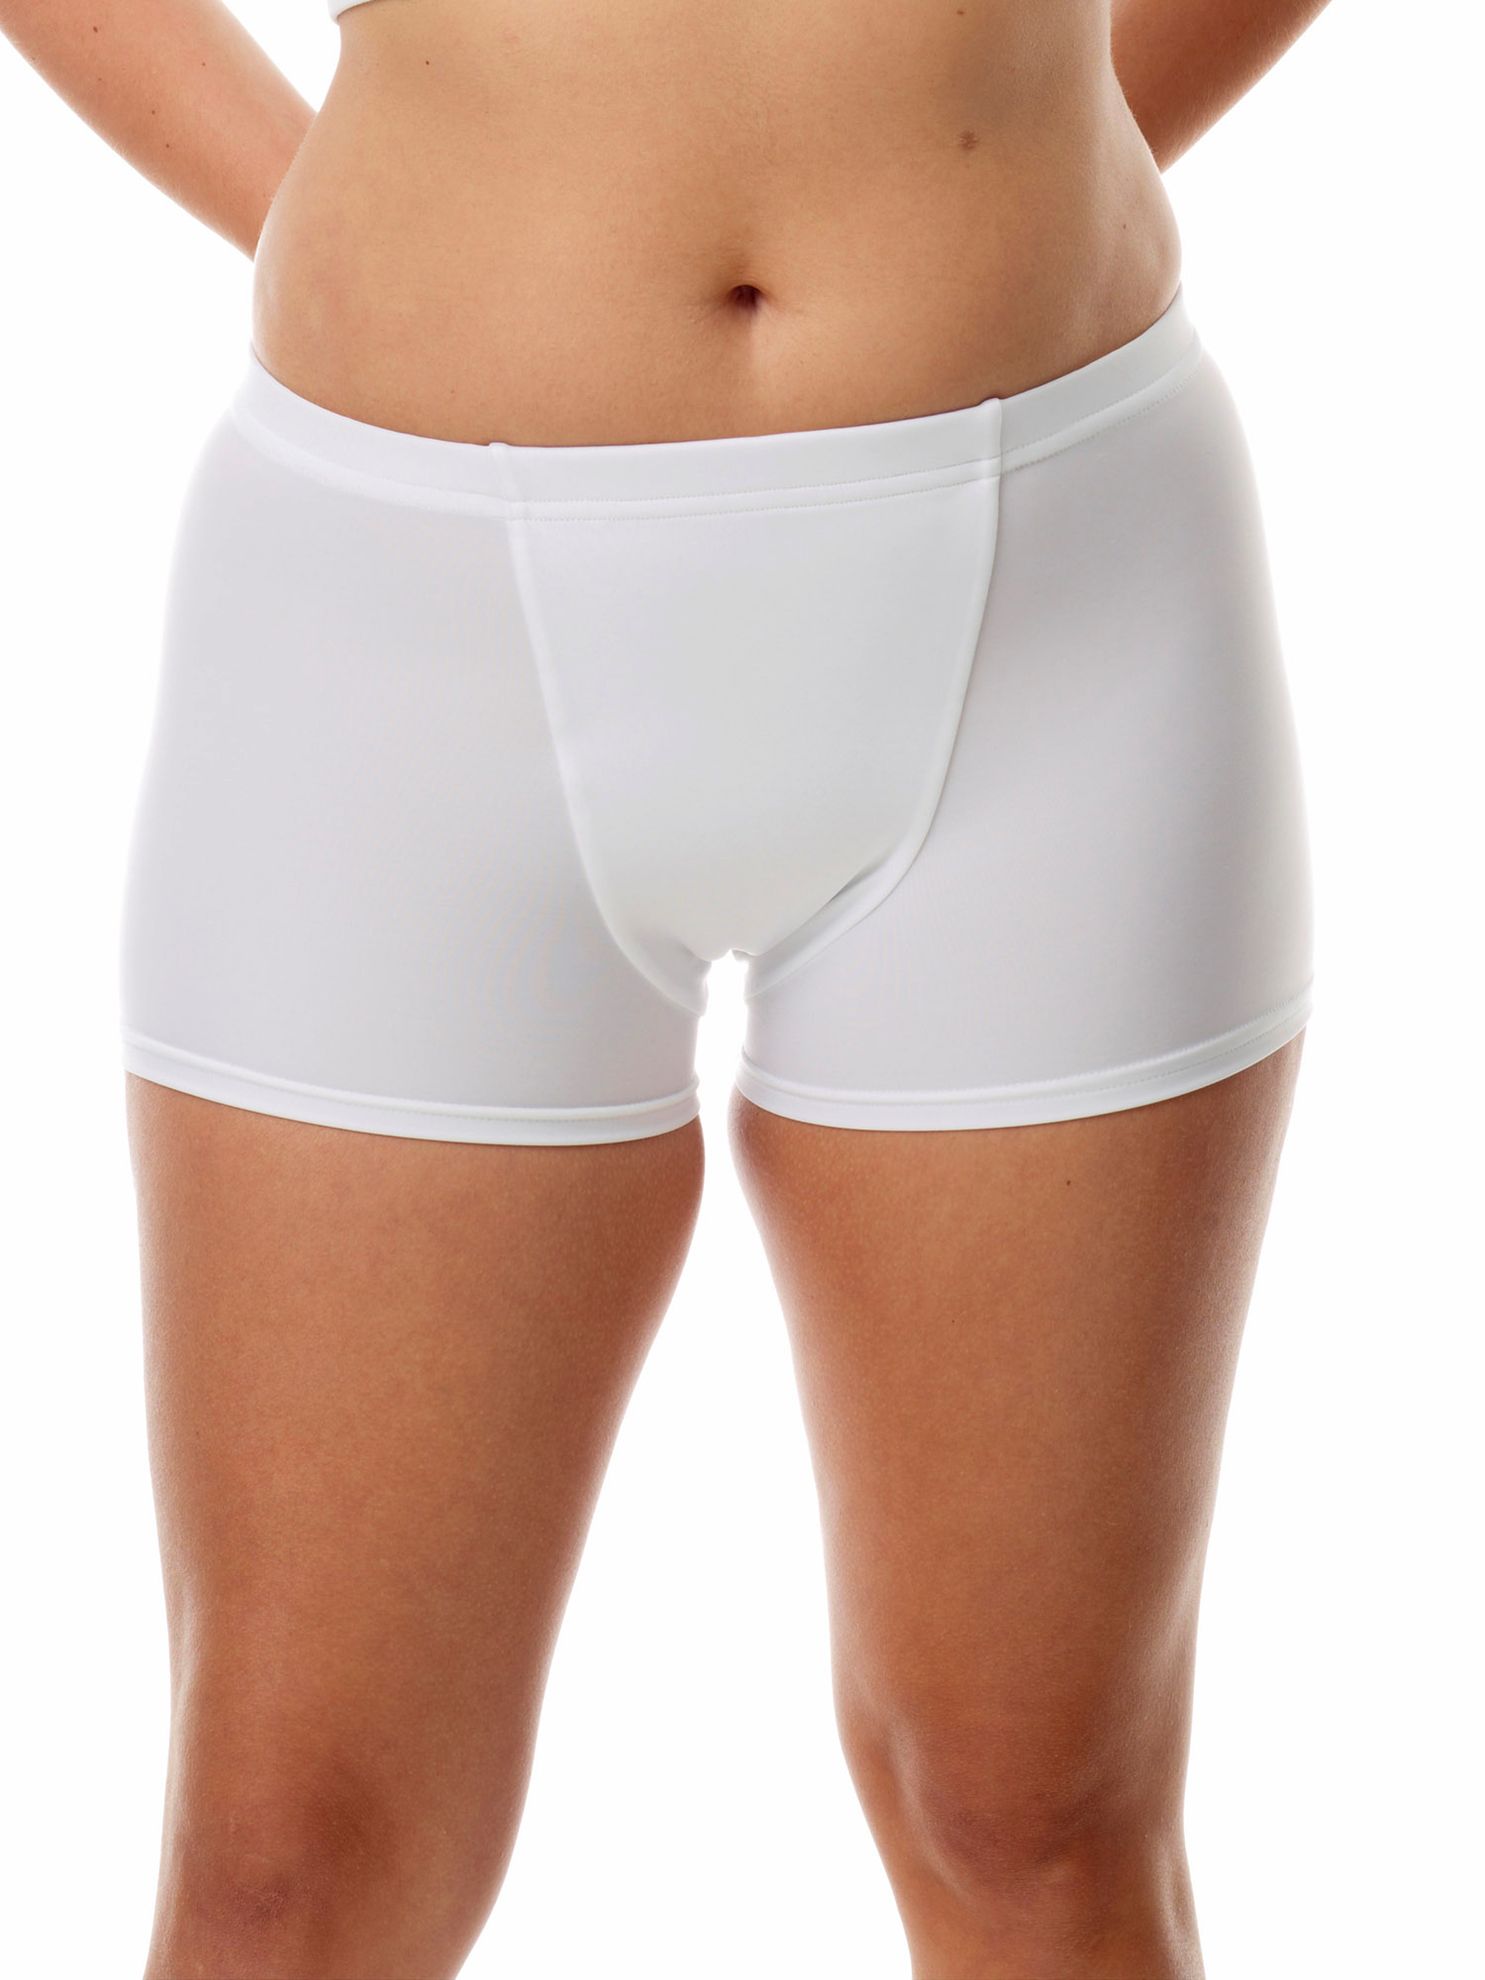 https://www.underworks.com/images/thumbs/0000295_womens-microfiber-compression-boy-shorts.jpeg